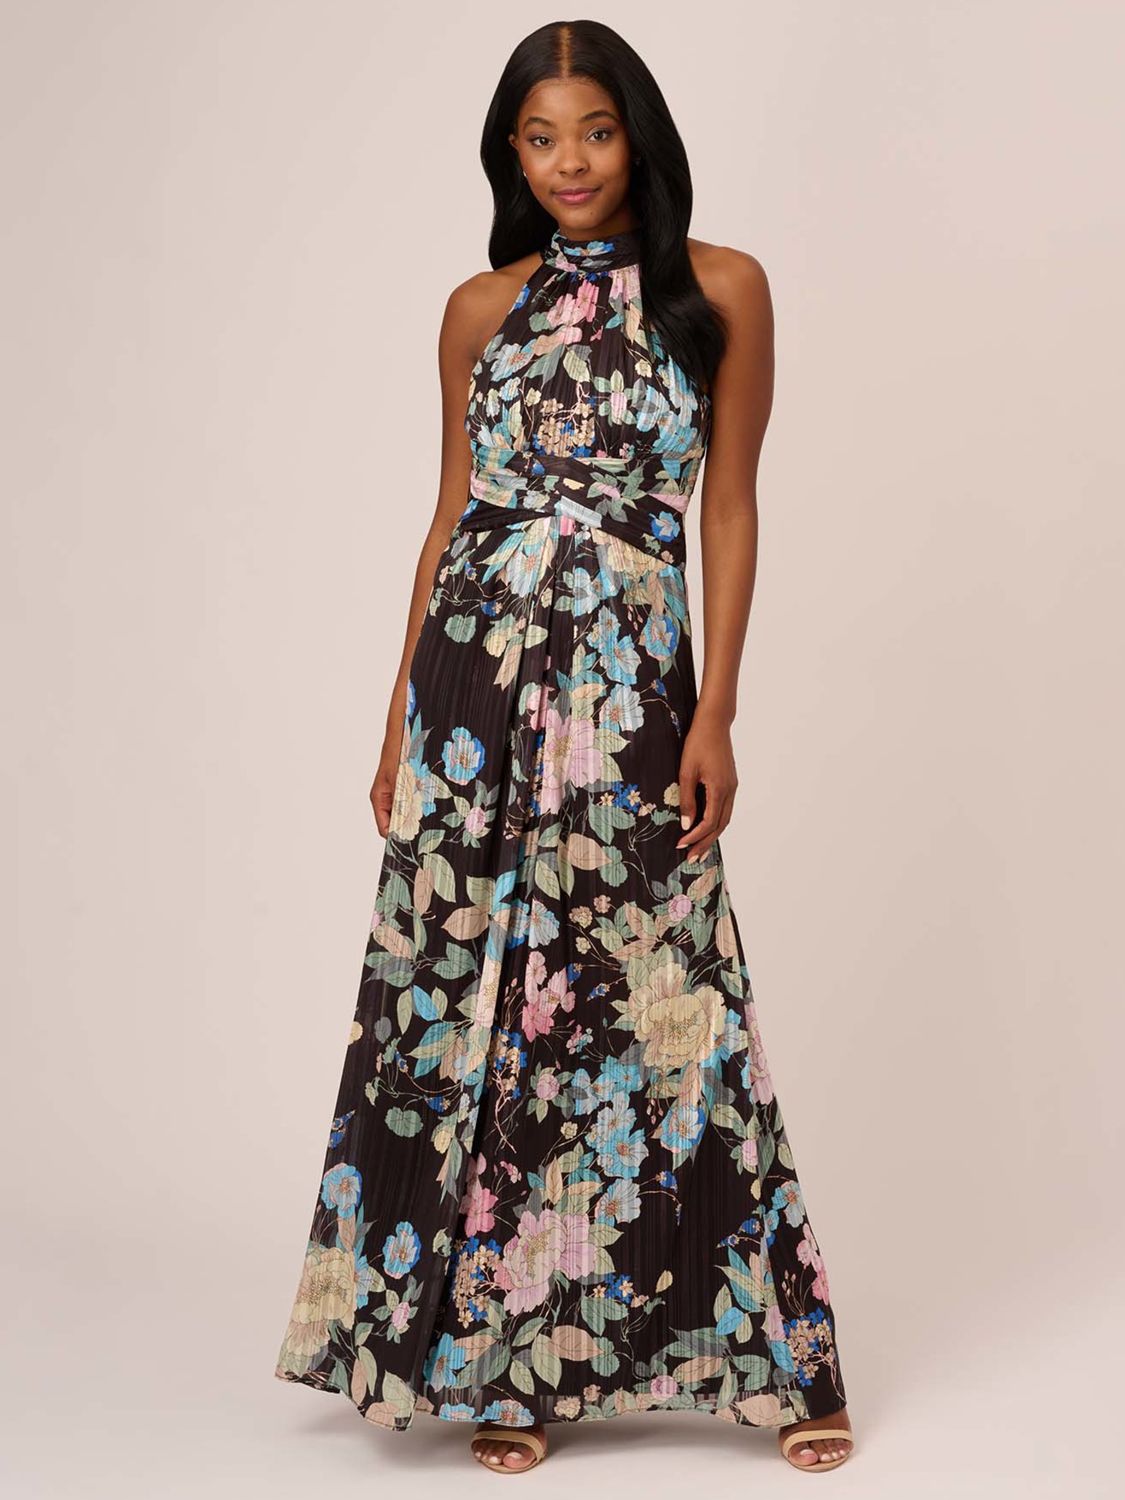 Adrianna Papell Floral Chiffon Halter Neck Maxi Dress, Black/Multi, 8